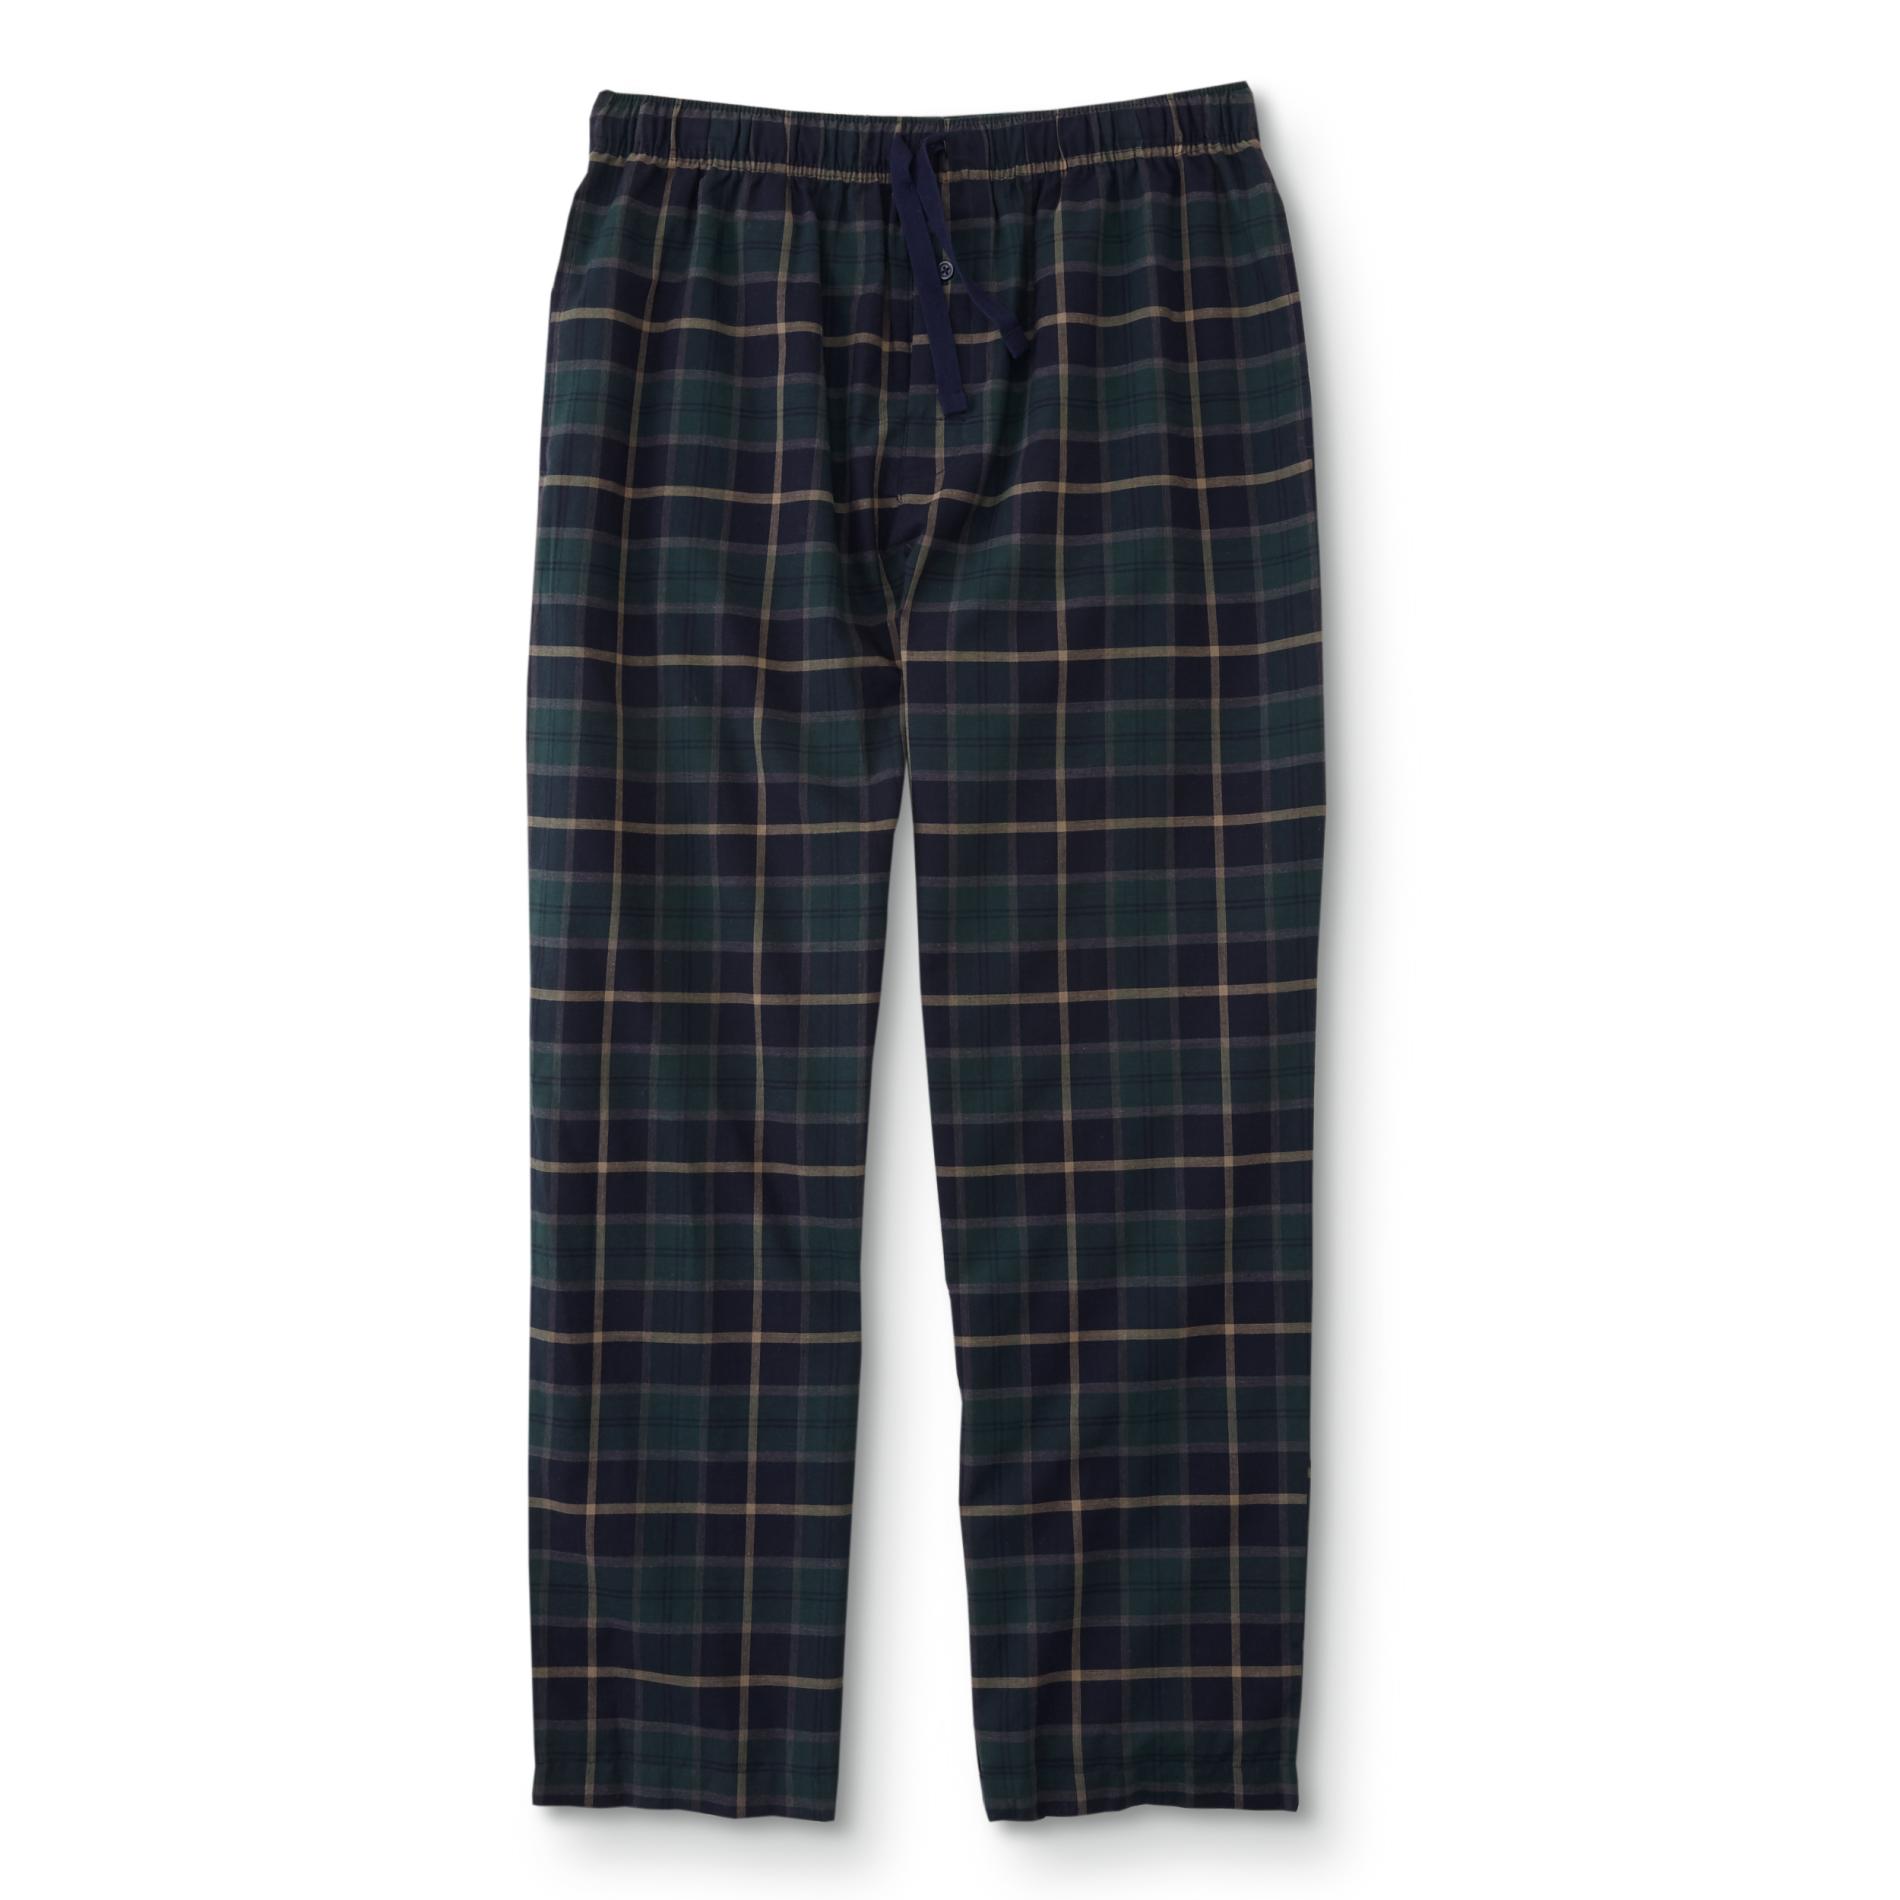 Simply Styled Men's Pajama Pants - Plaid